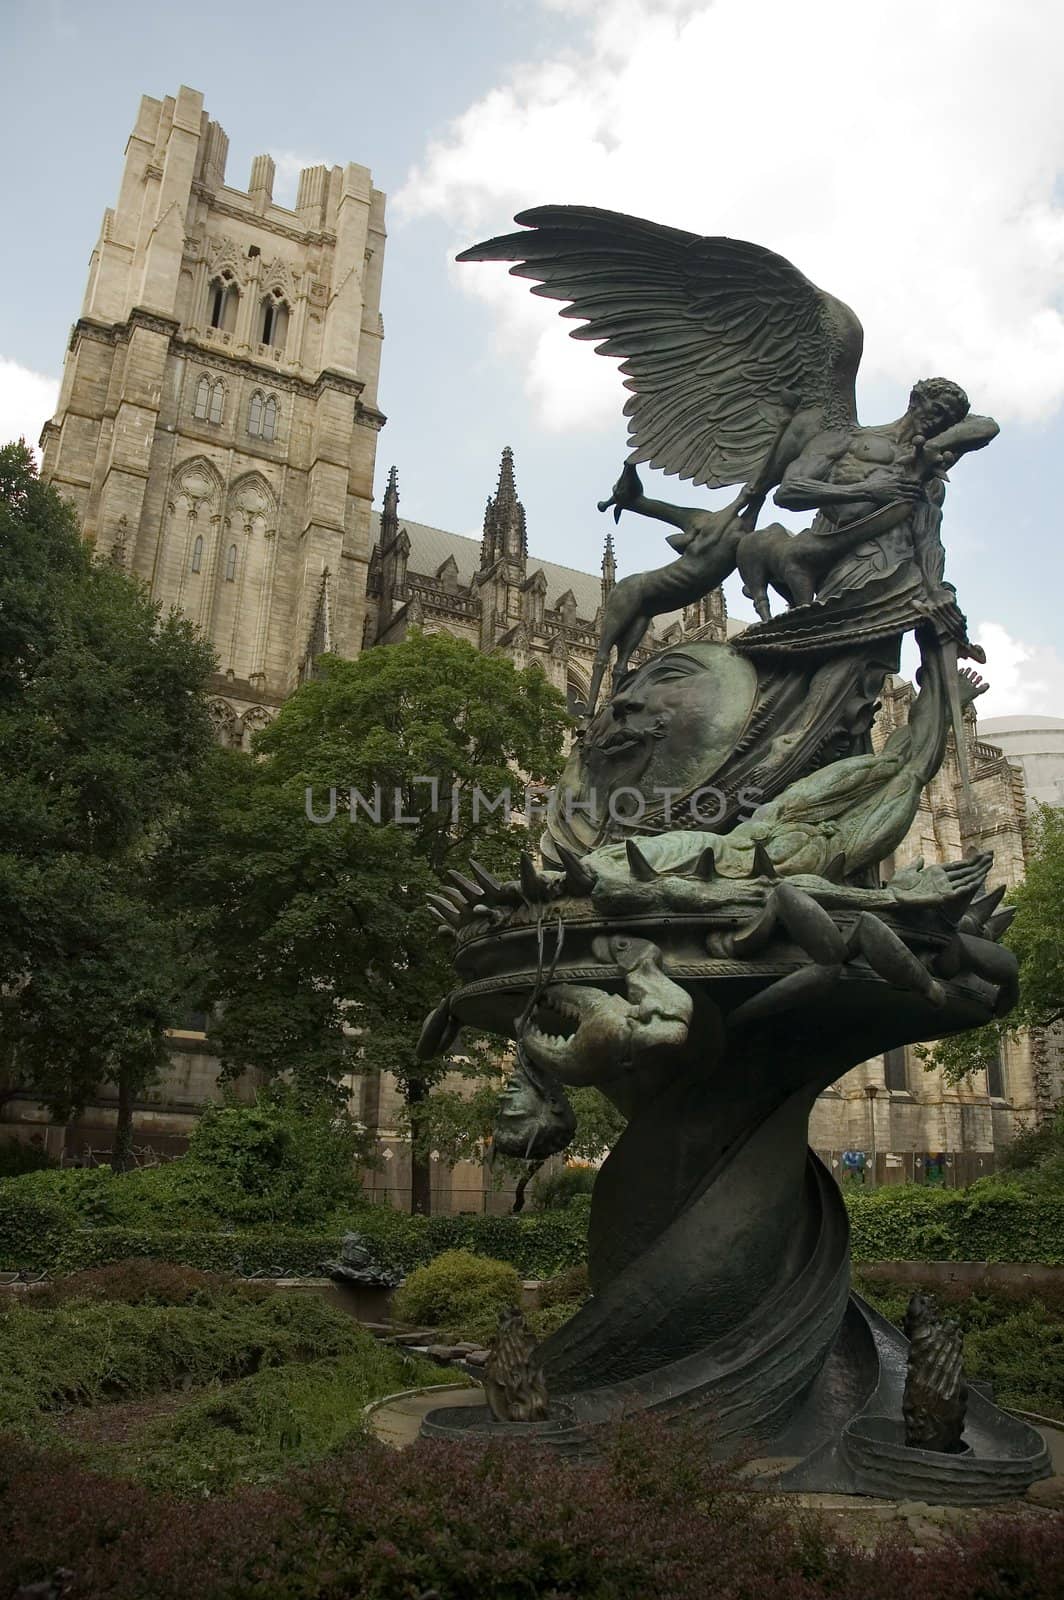 angel statue in childrens sculpture garden, Cathedral Church of Saint John the Divine in background